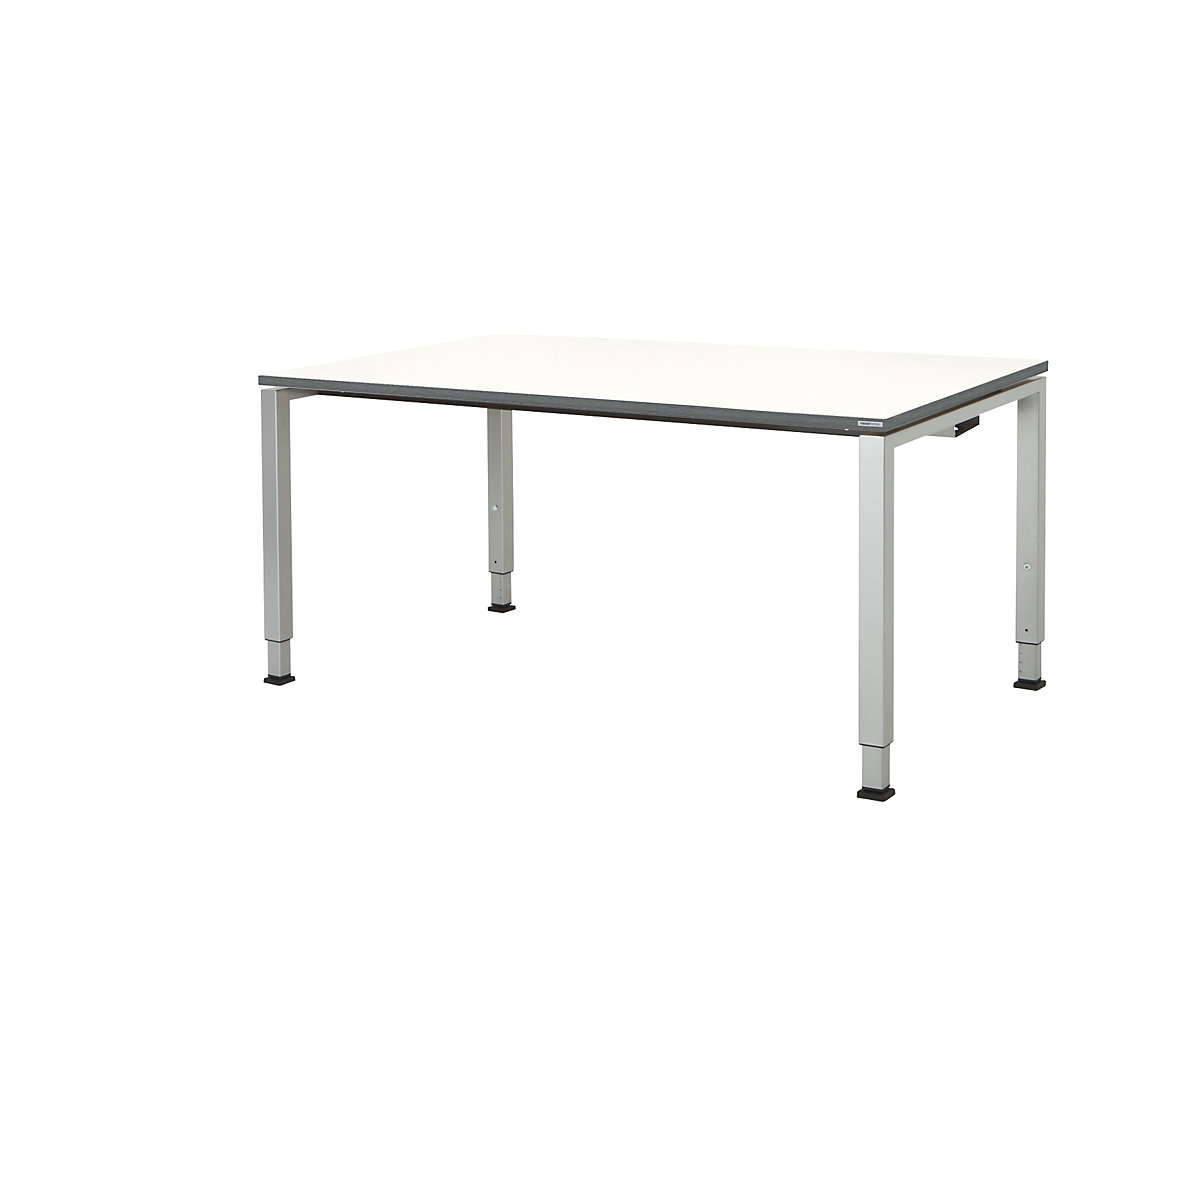 Pravokotna miza, s kvadratnim podnožjem – mauser